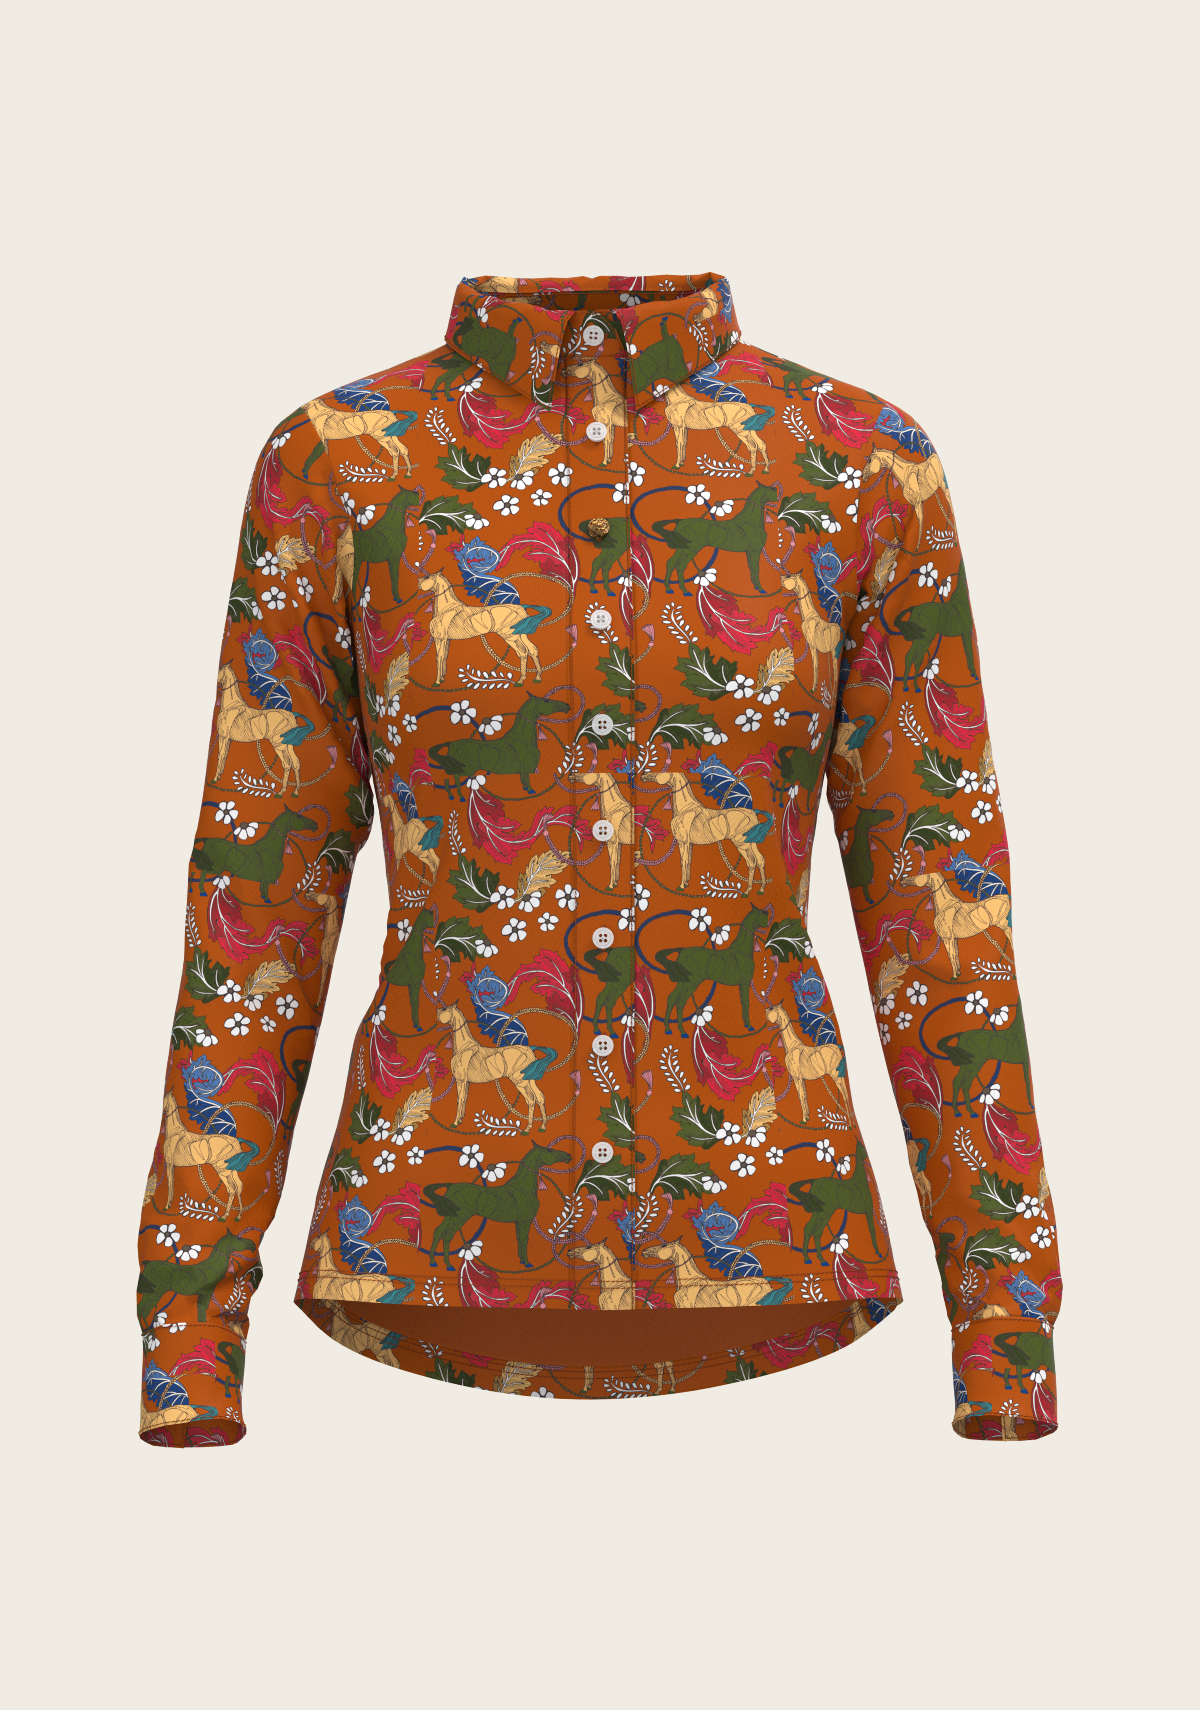 Flower Power Ladies Button Shirt by Espoir Equestrian